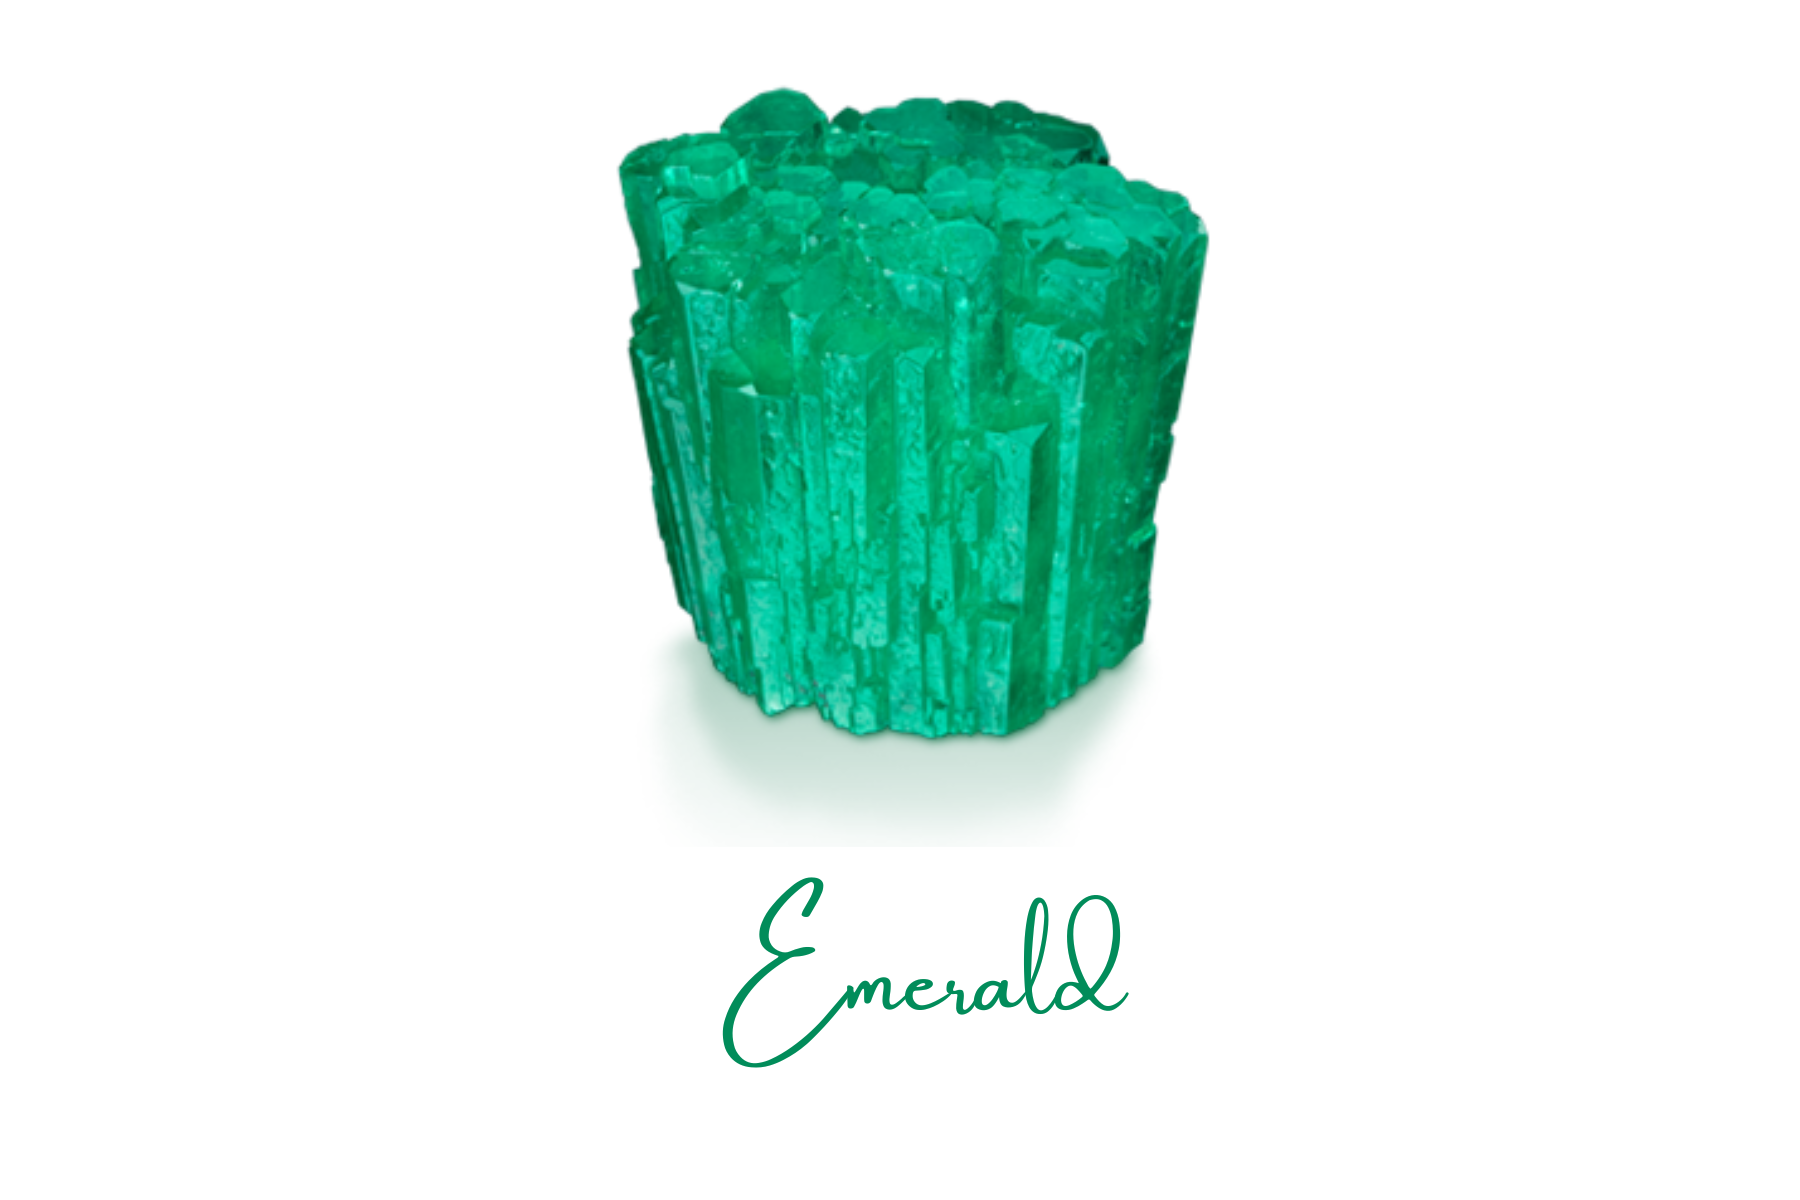 Elongated emerald crystals linked together